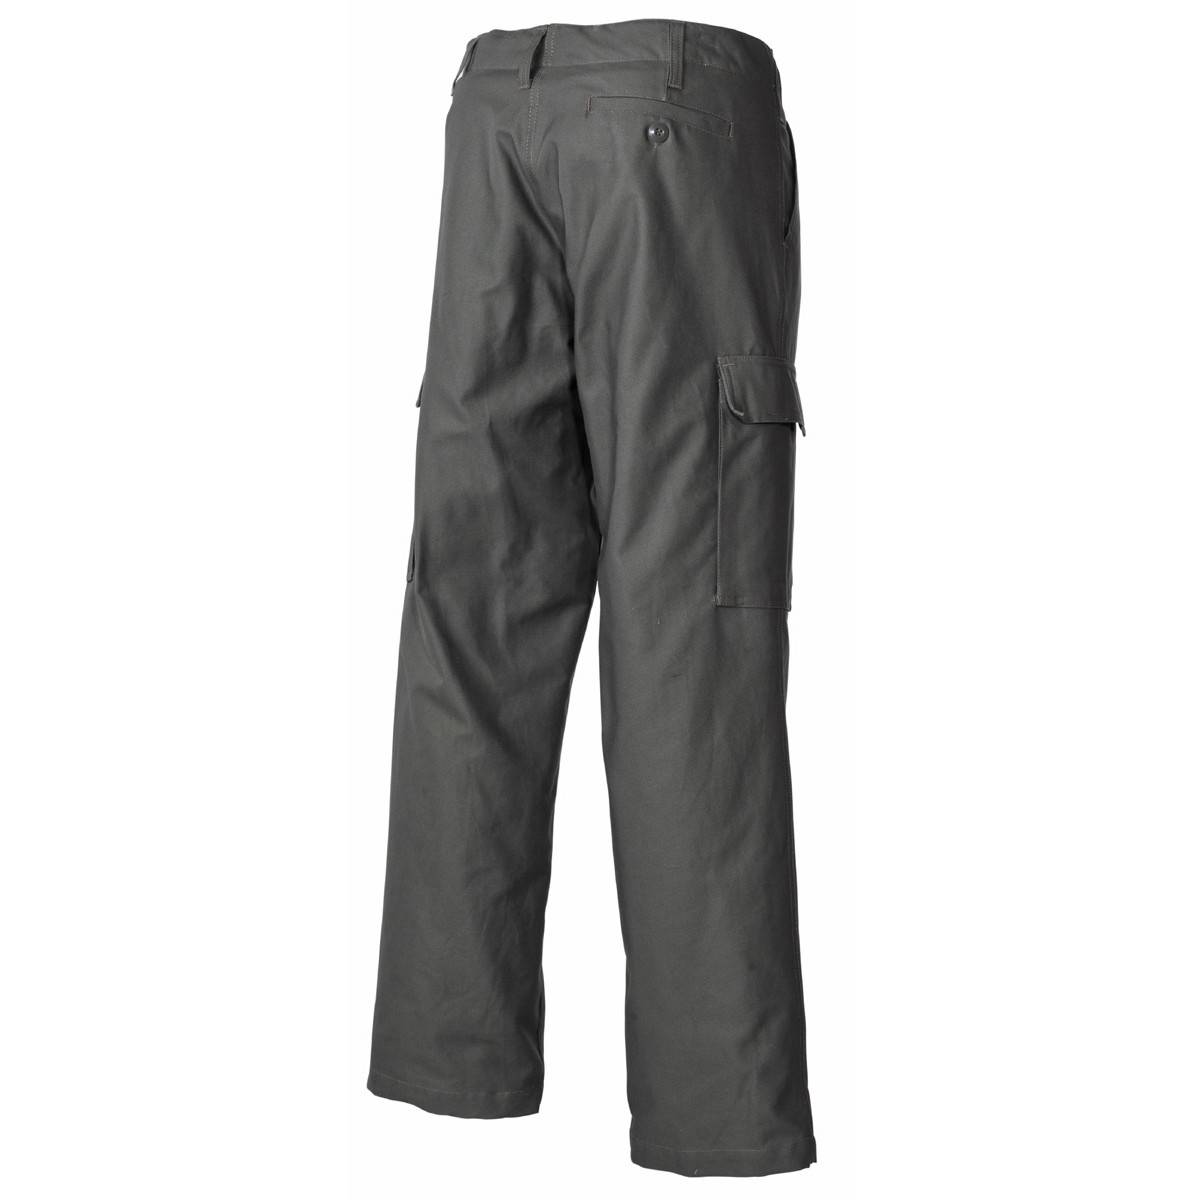 BW Moleskin Pants - Thermal Lining - Green OD | Apparel \ Pants ...